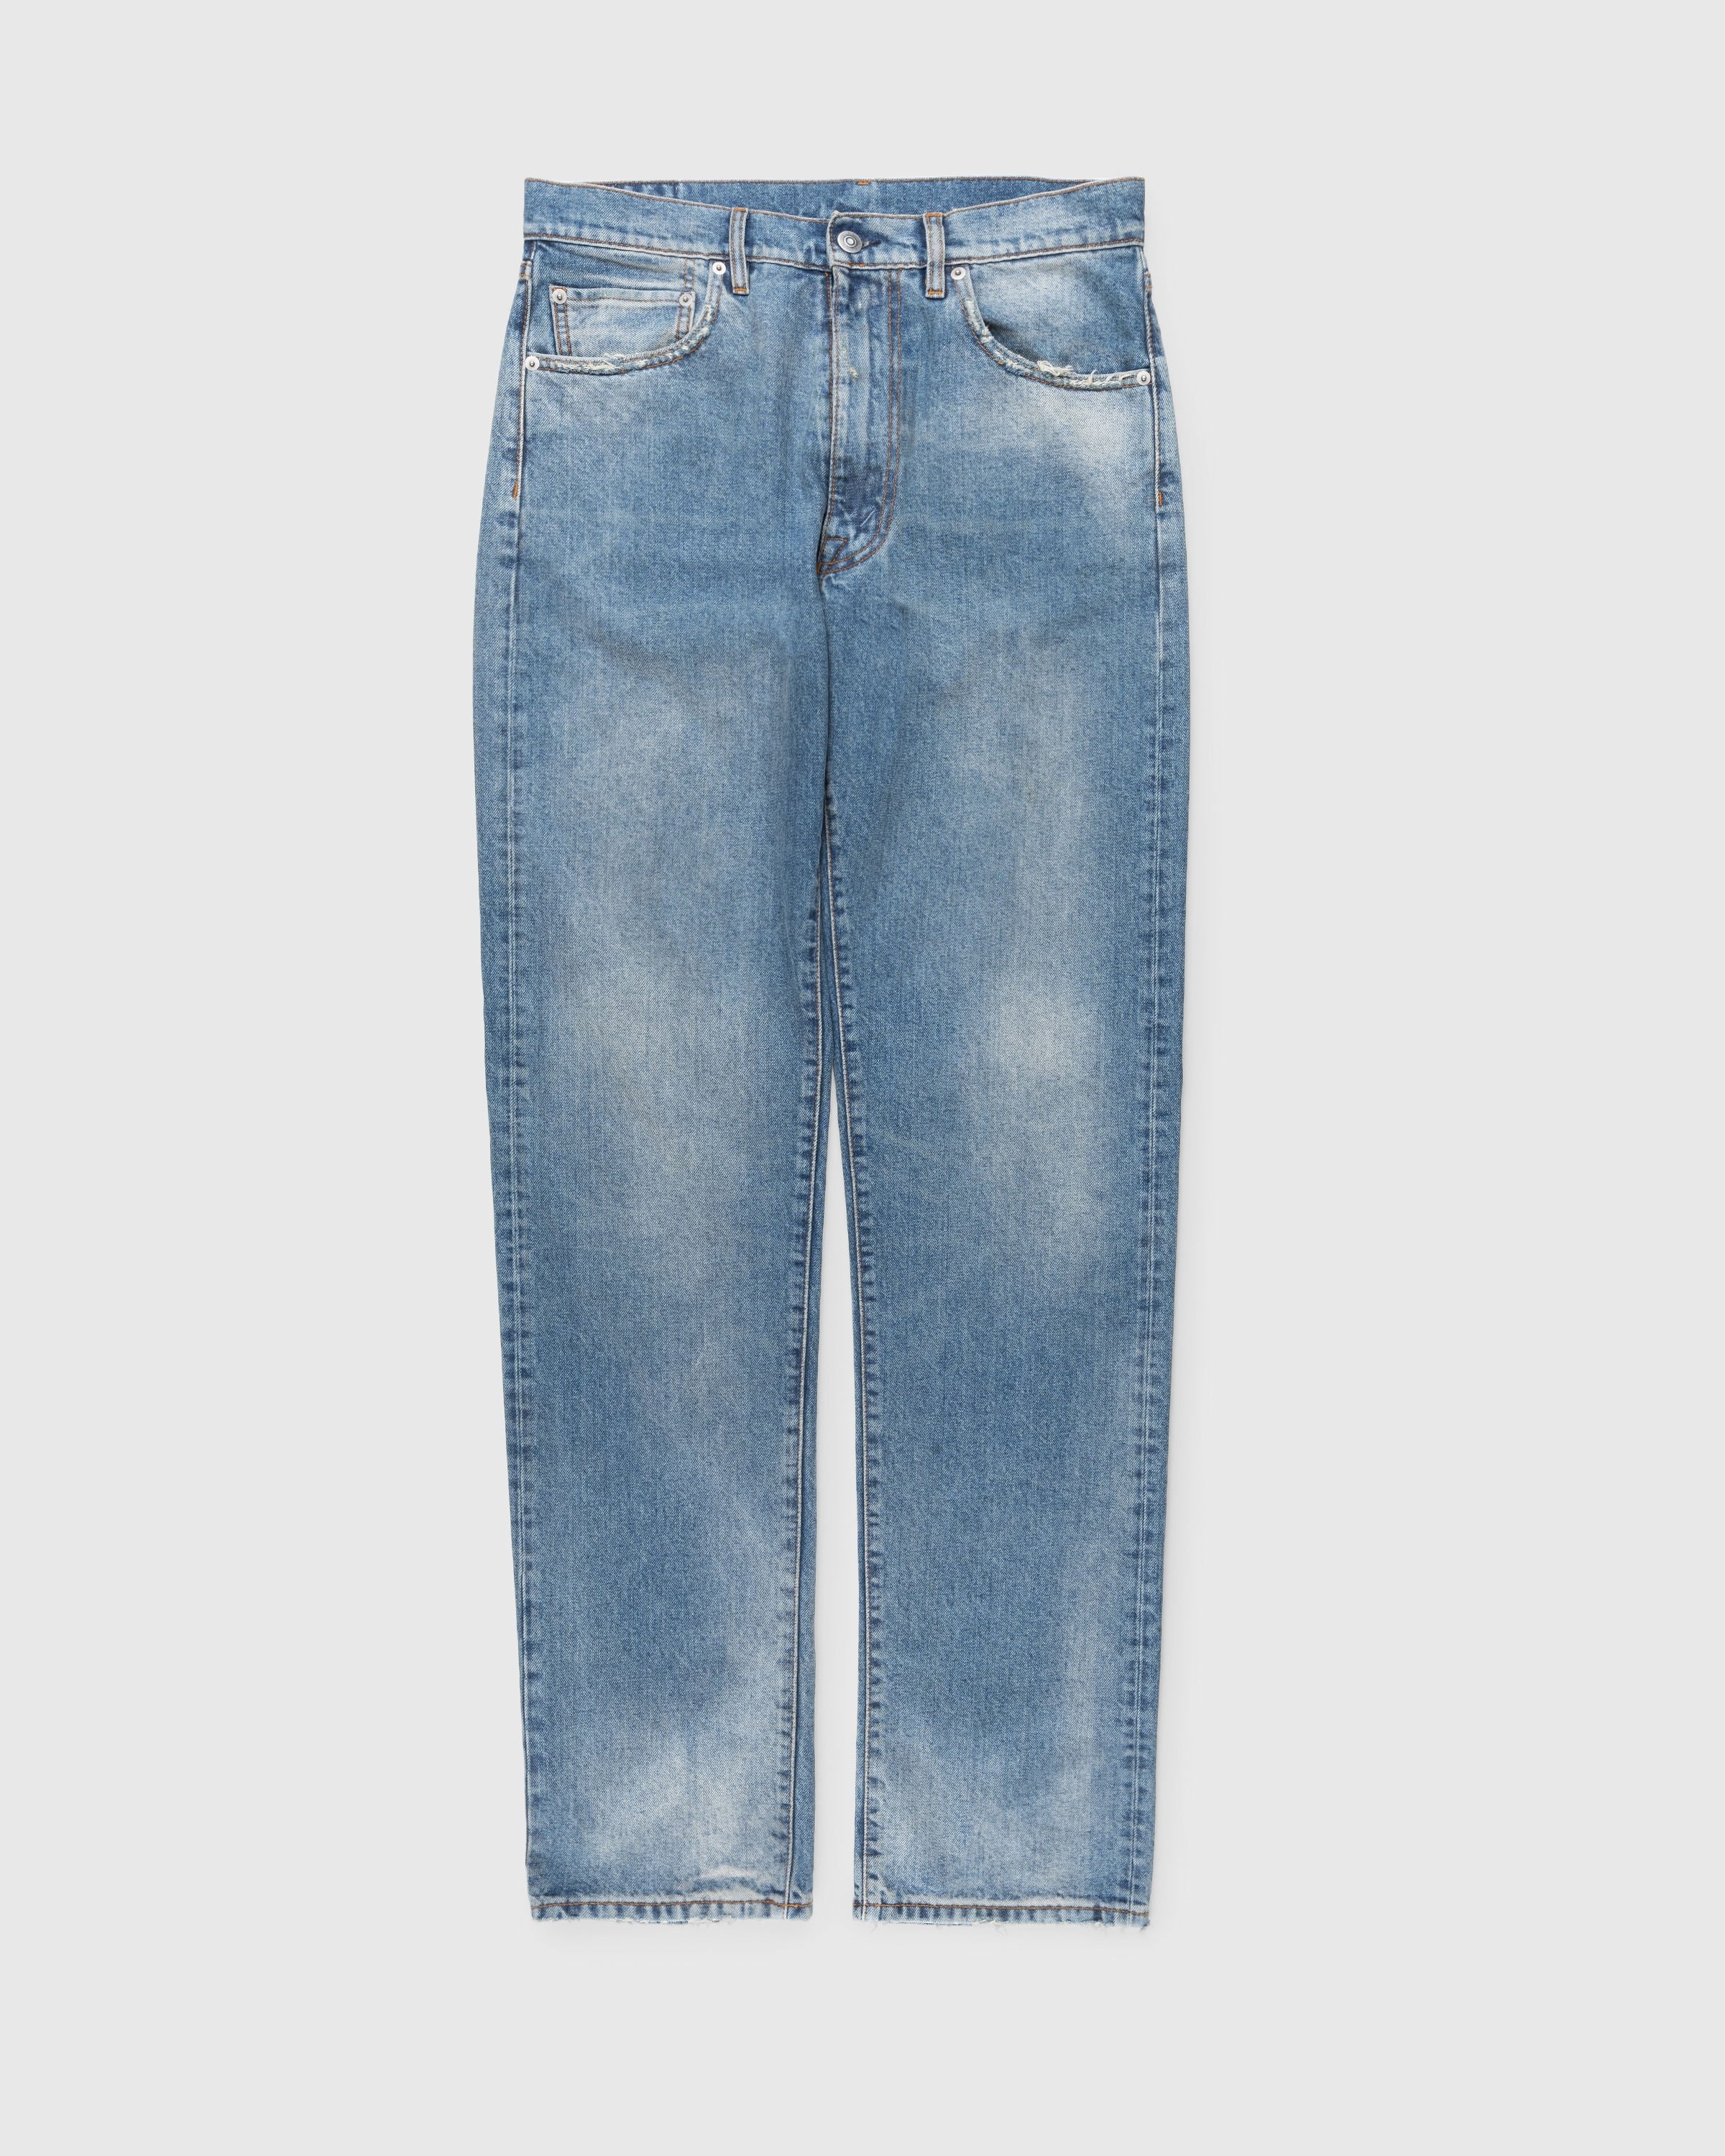 Maison Margiela – 5-Pocket Jeans Light Indigo | Highsnobiety Shop